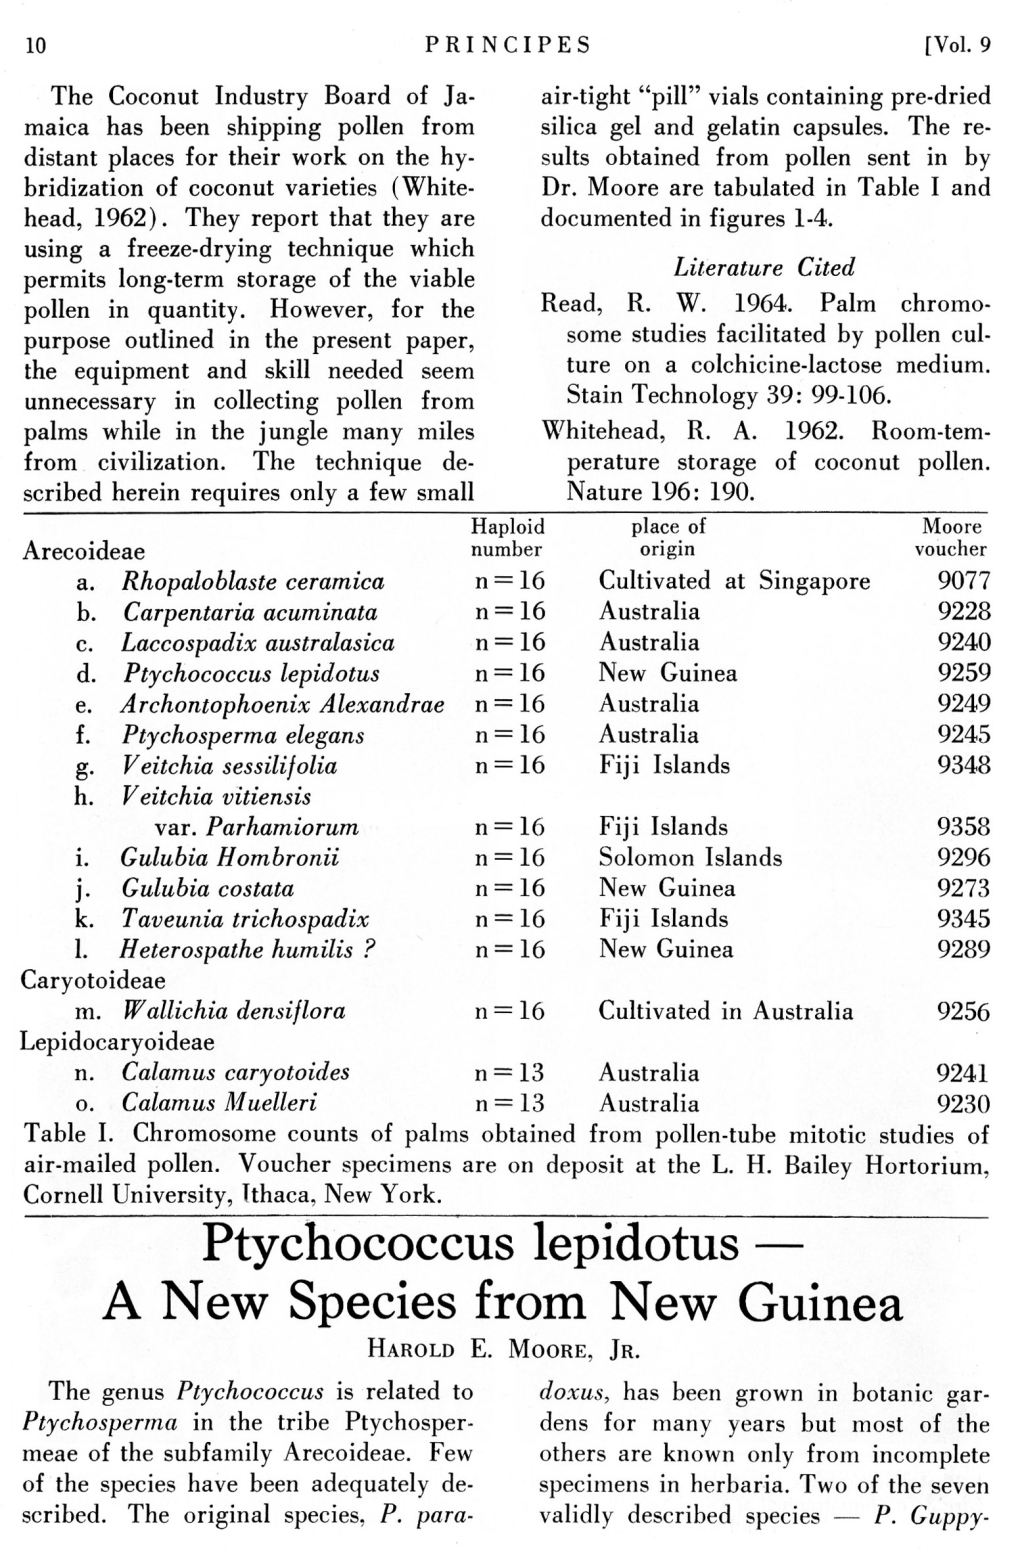 Ptychococcus Lepidotus N=16 New Guinea 9259 E